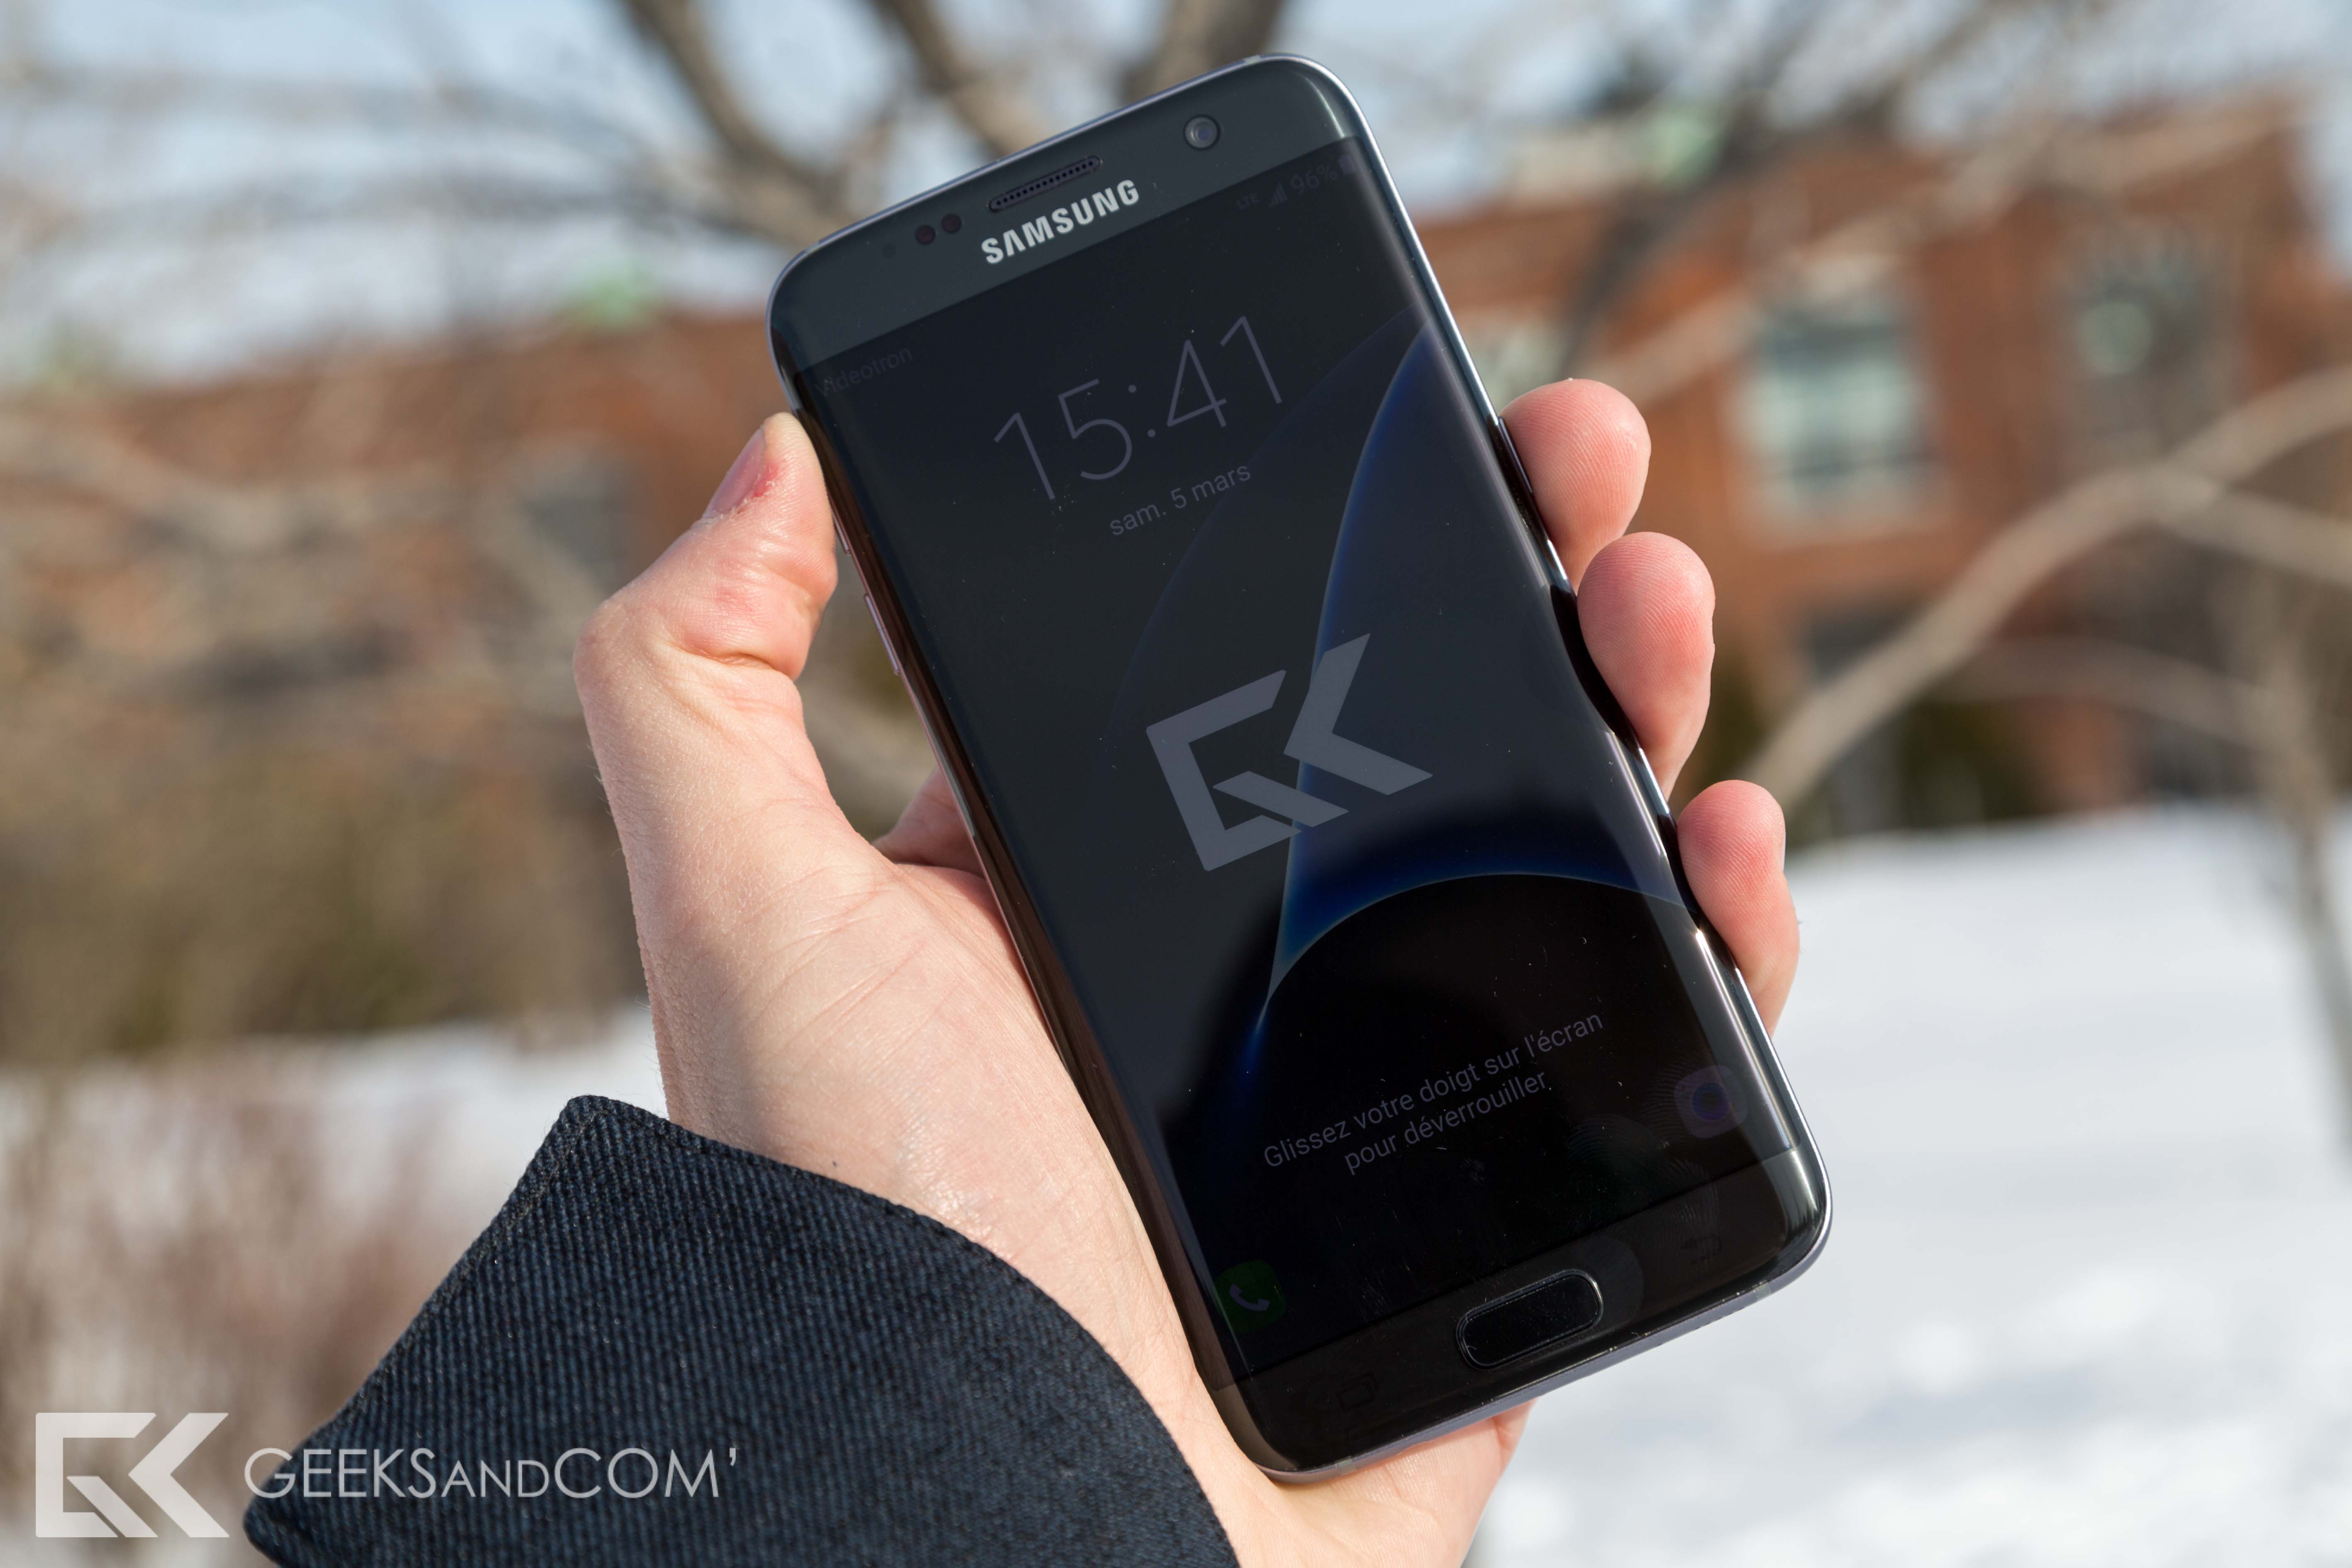 Samsung Galaxy S7 edge - Test Geeks and Com -7